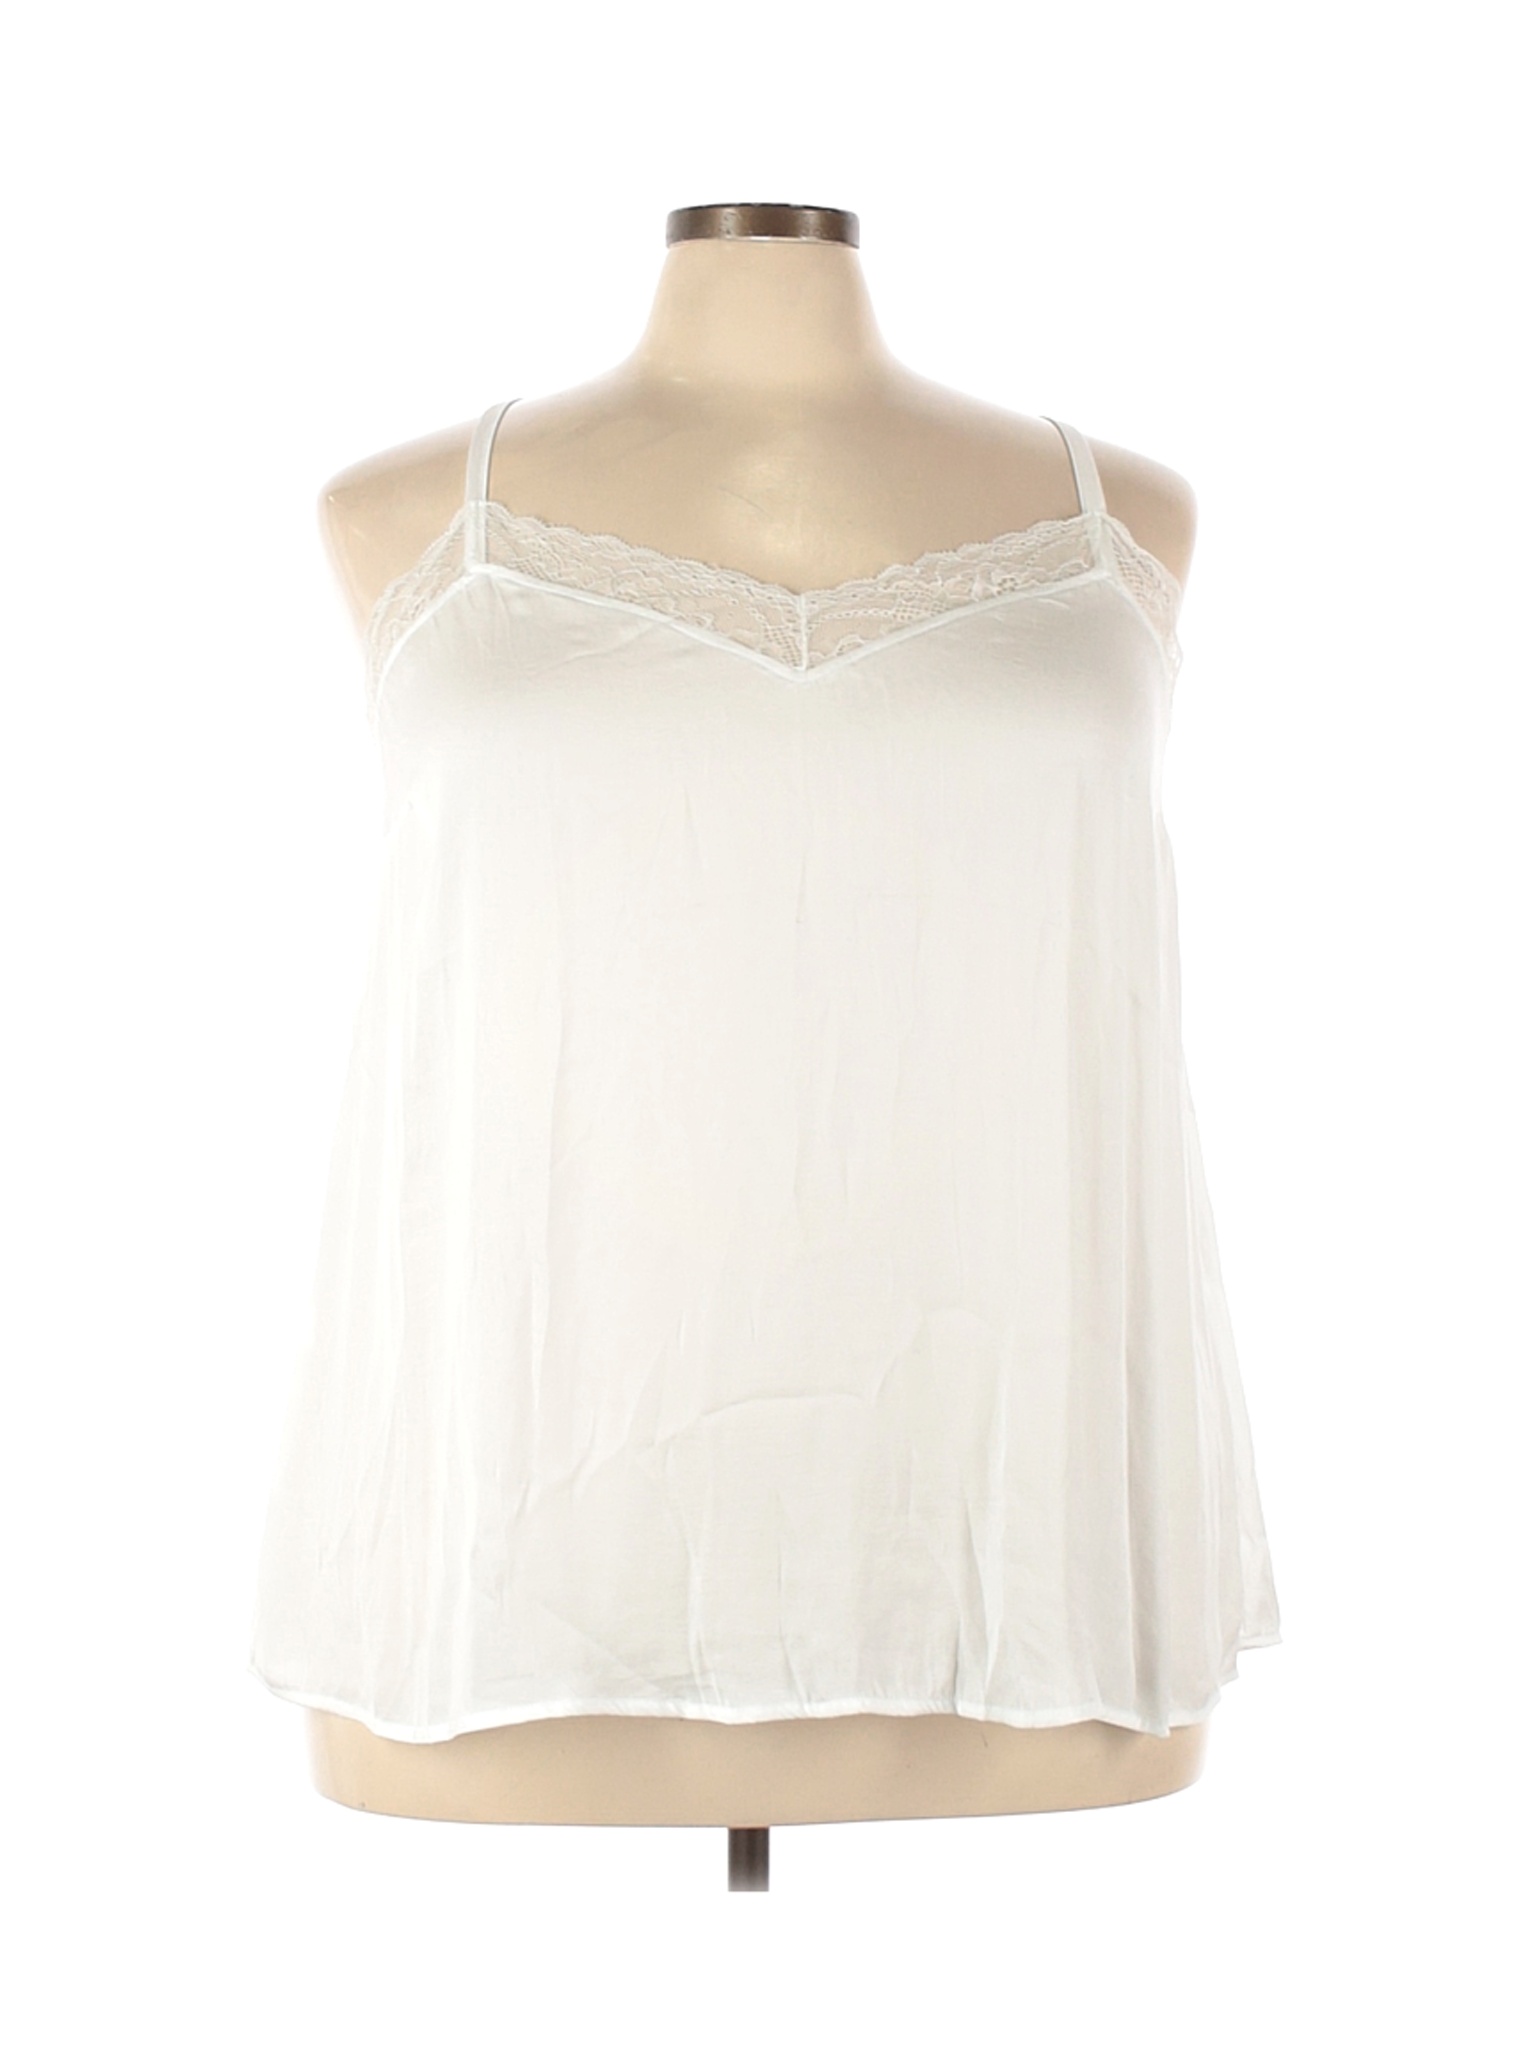 NWT Torrid Women White Sleeveless Blouse 3X Plus | eBay